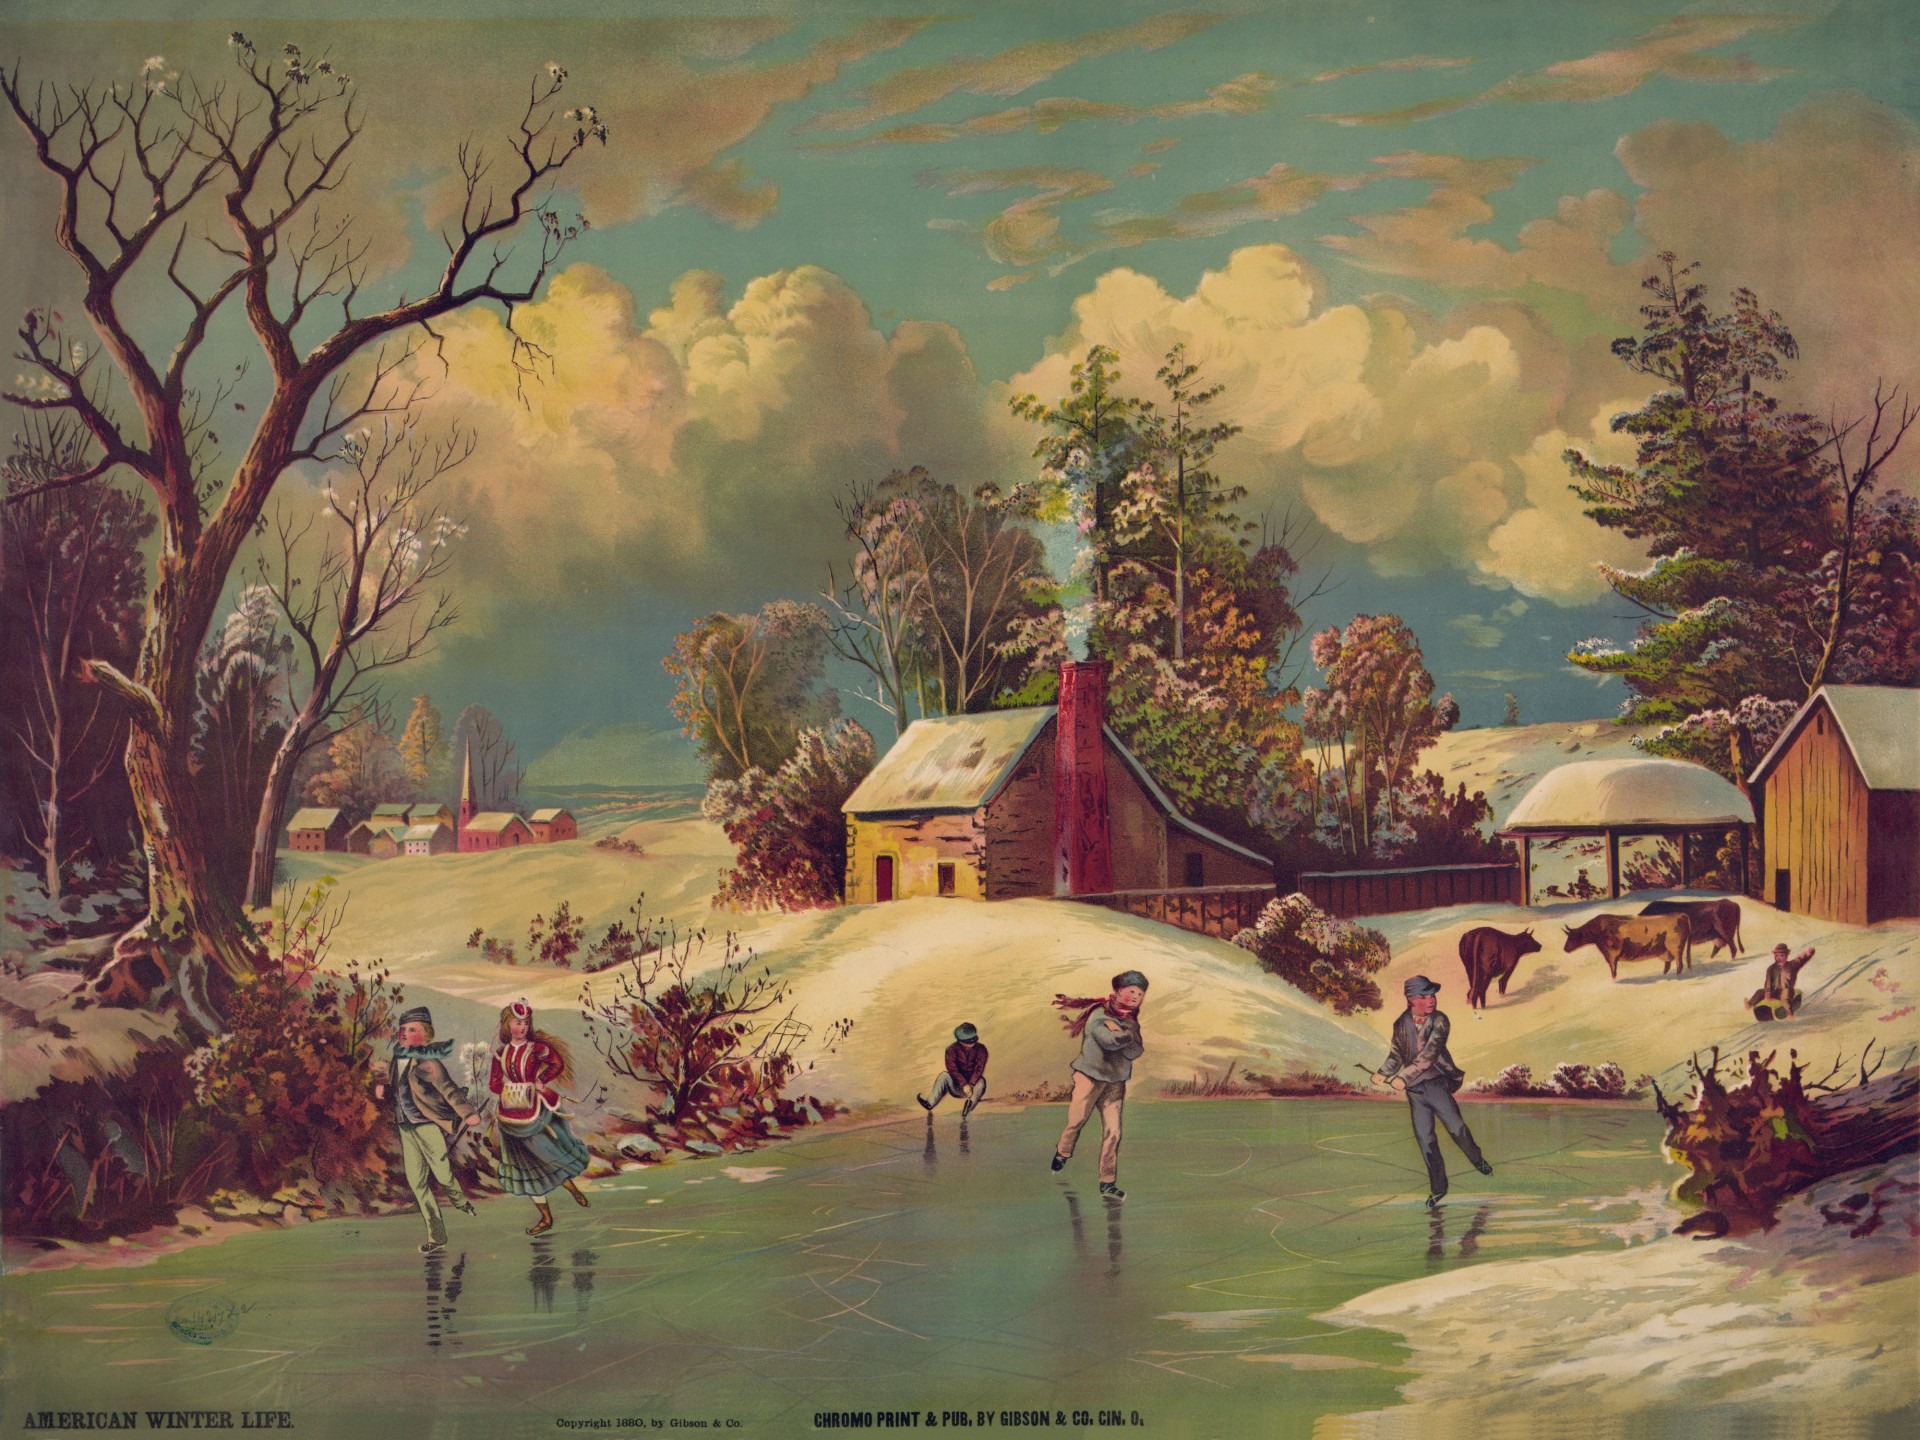 American Winter Life Illustration